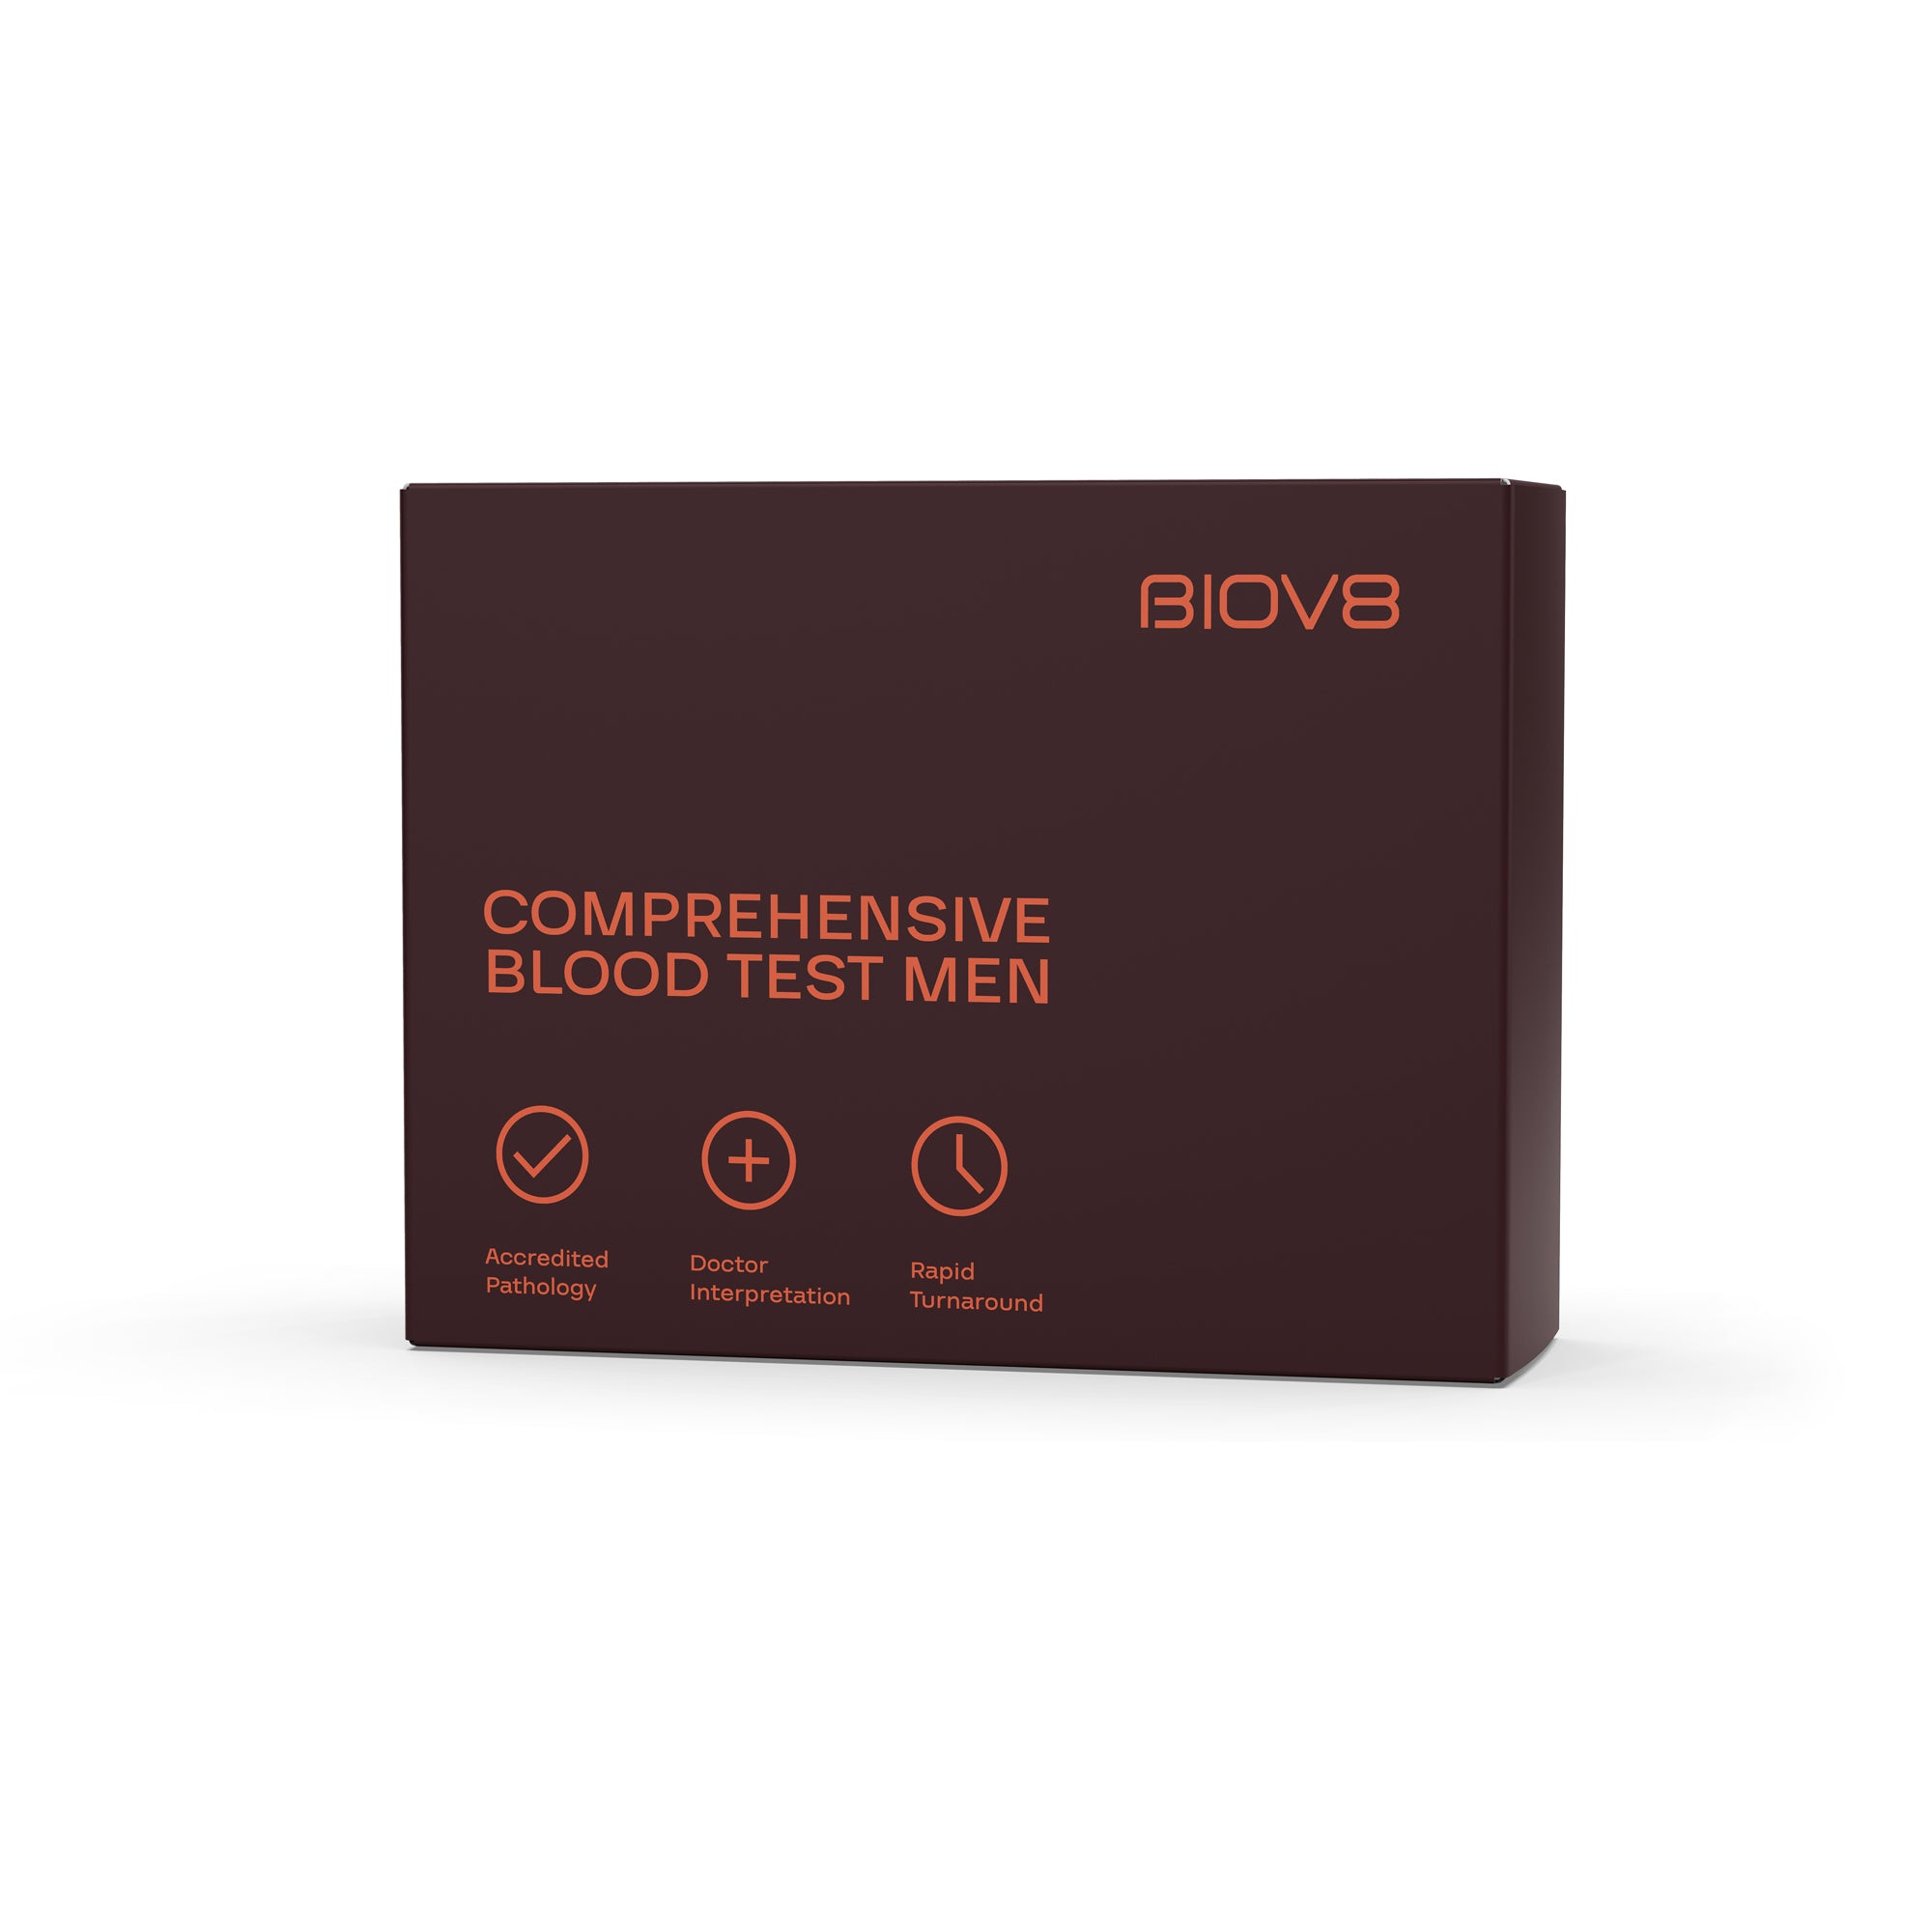 Biov8's Custom Comprehensive blood work analysis kit